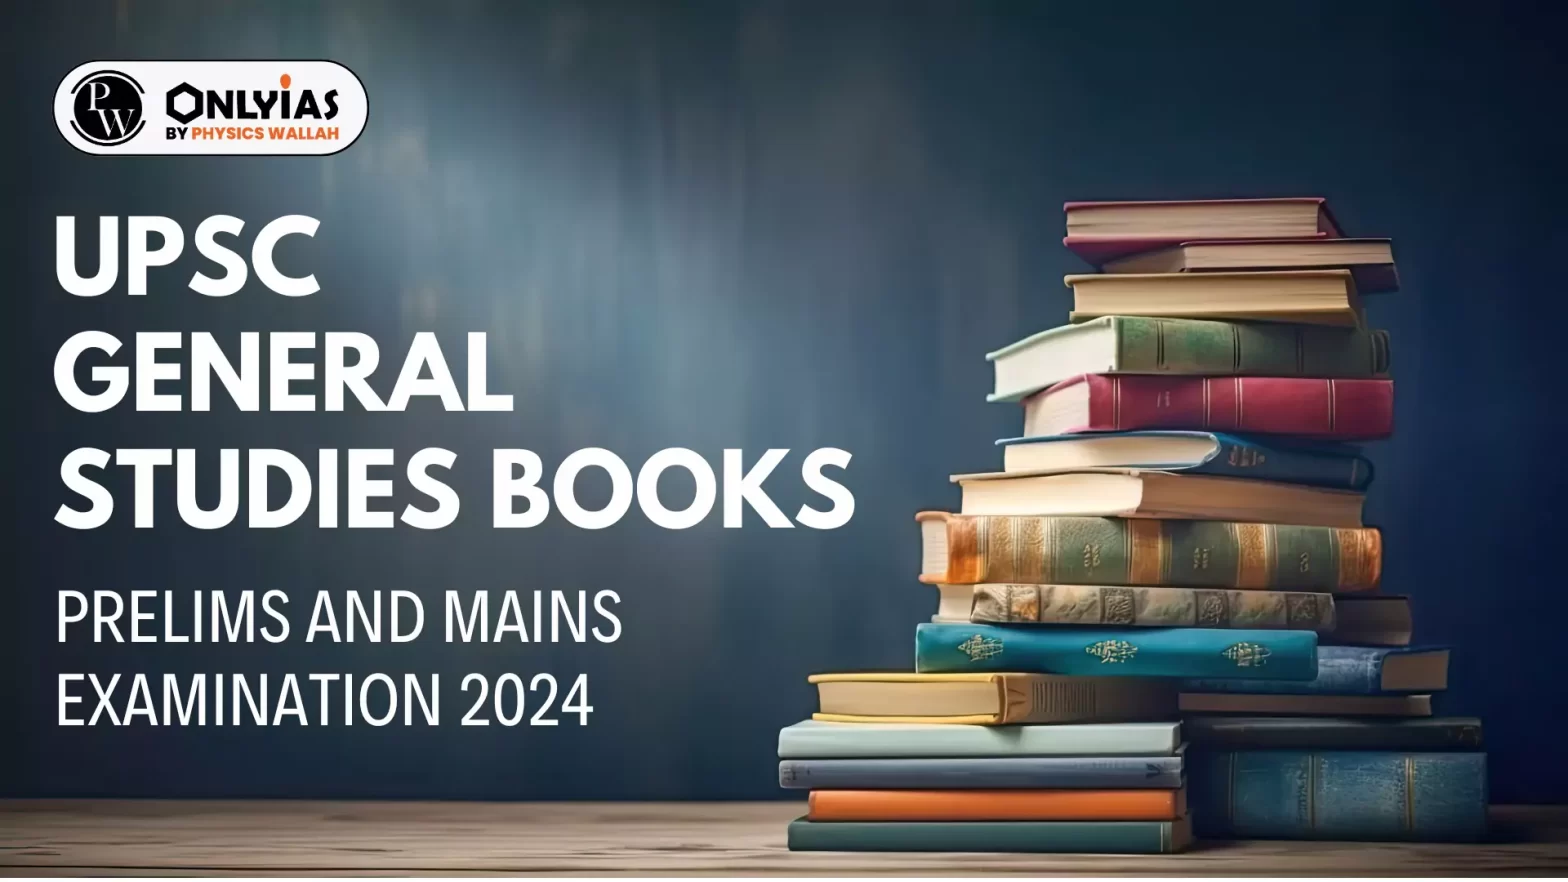 UPSC General Studies Books: Prelims and Mains Examination 2024